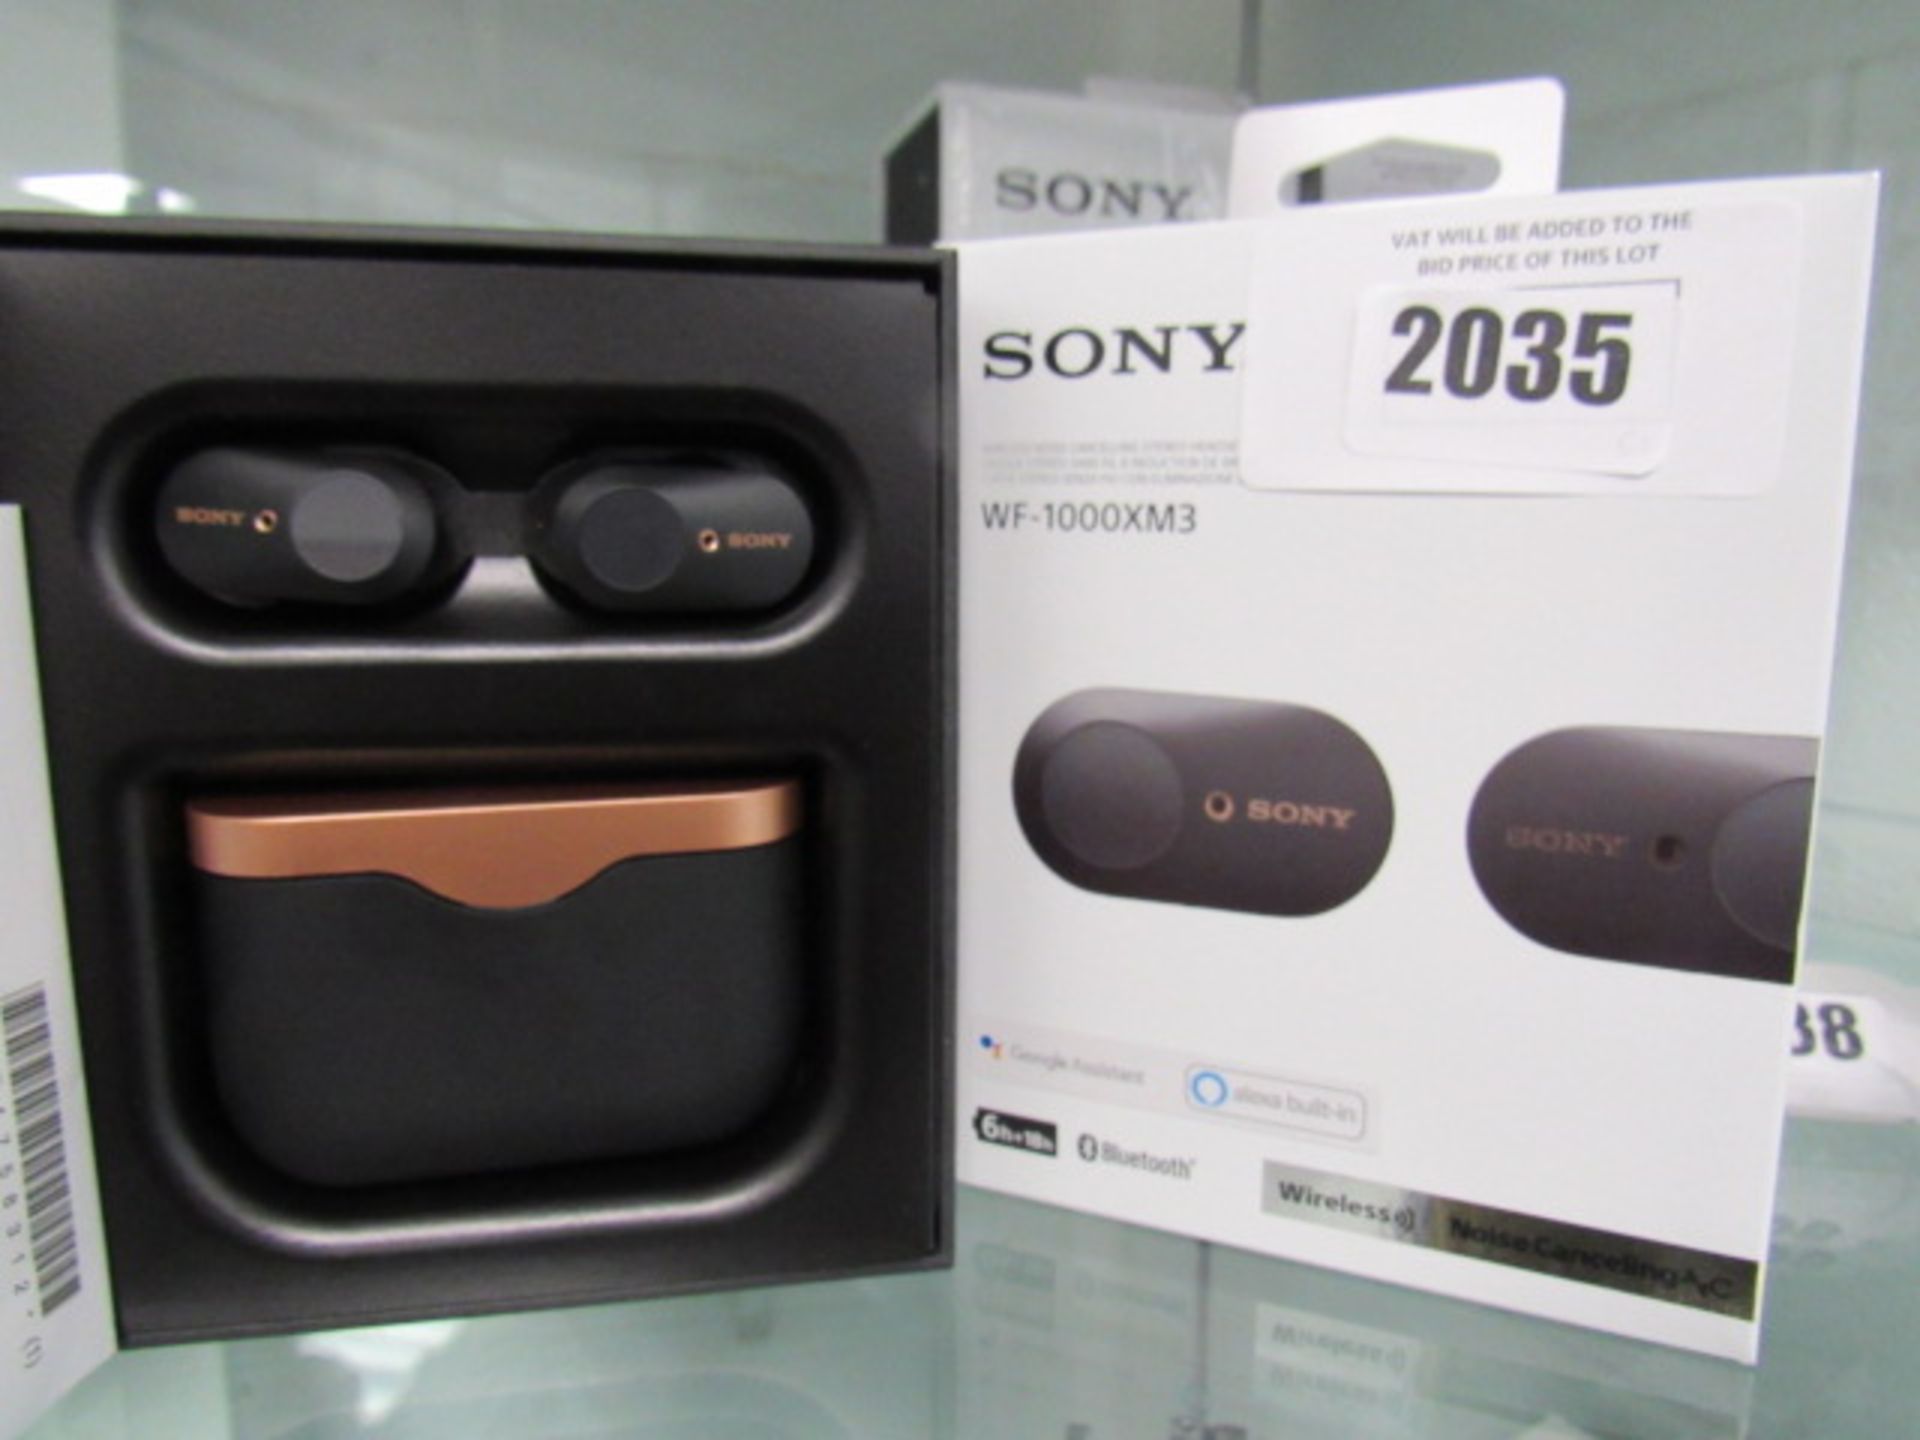 Sony WF1000XM3 wireless noise cancelling ear buds in box